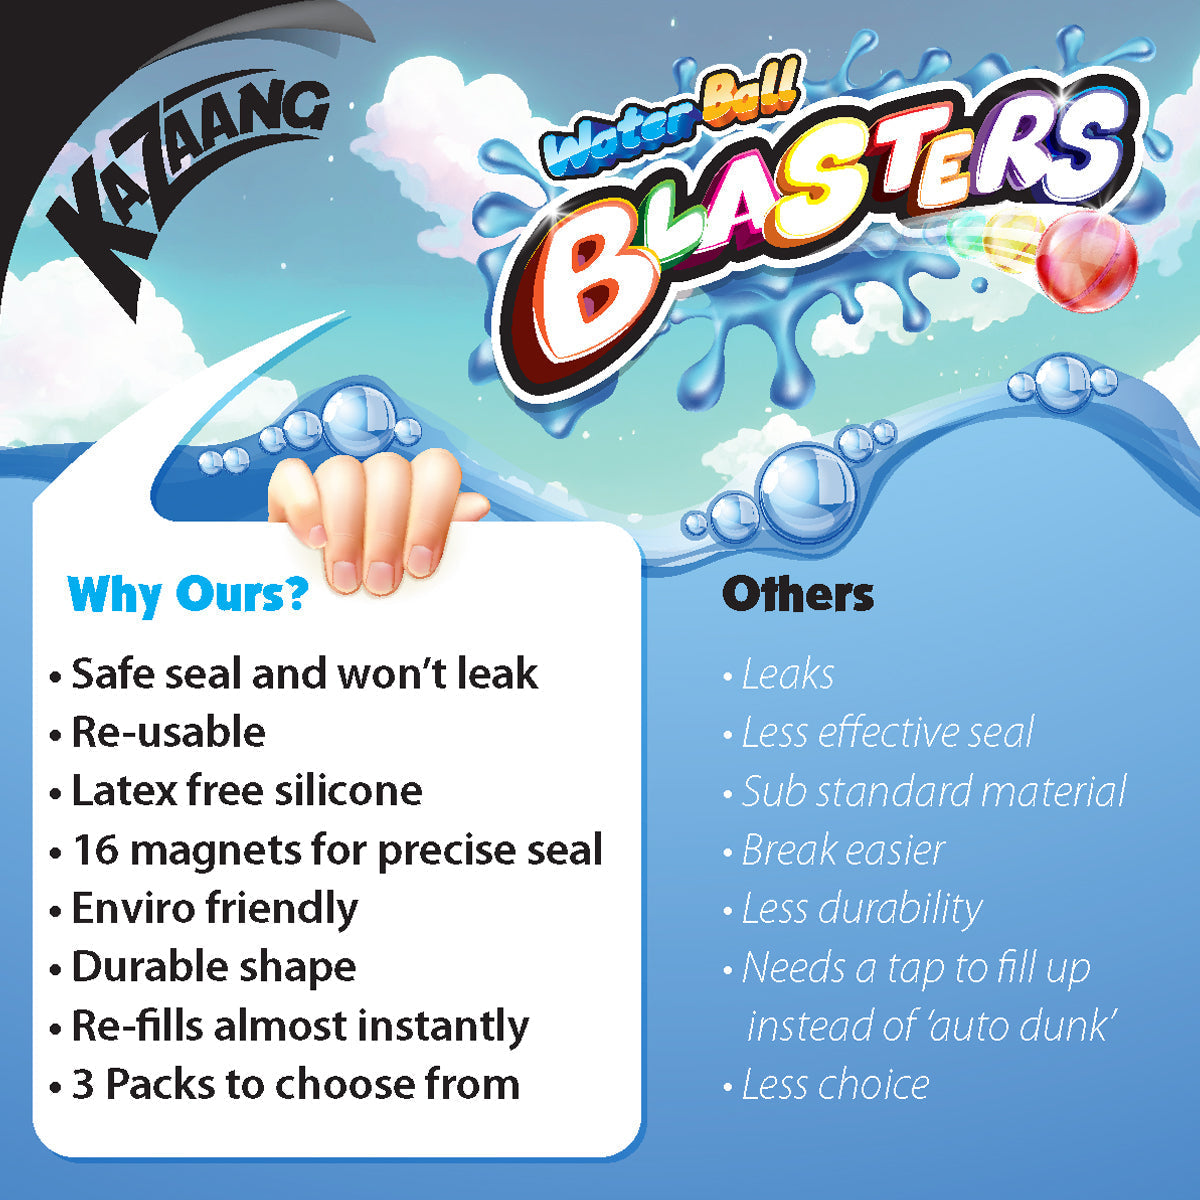 Water Ball Blasters - 6 pack